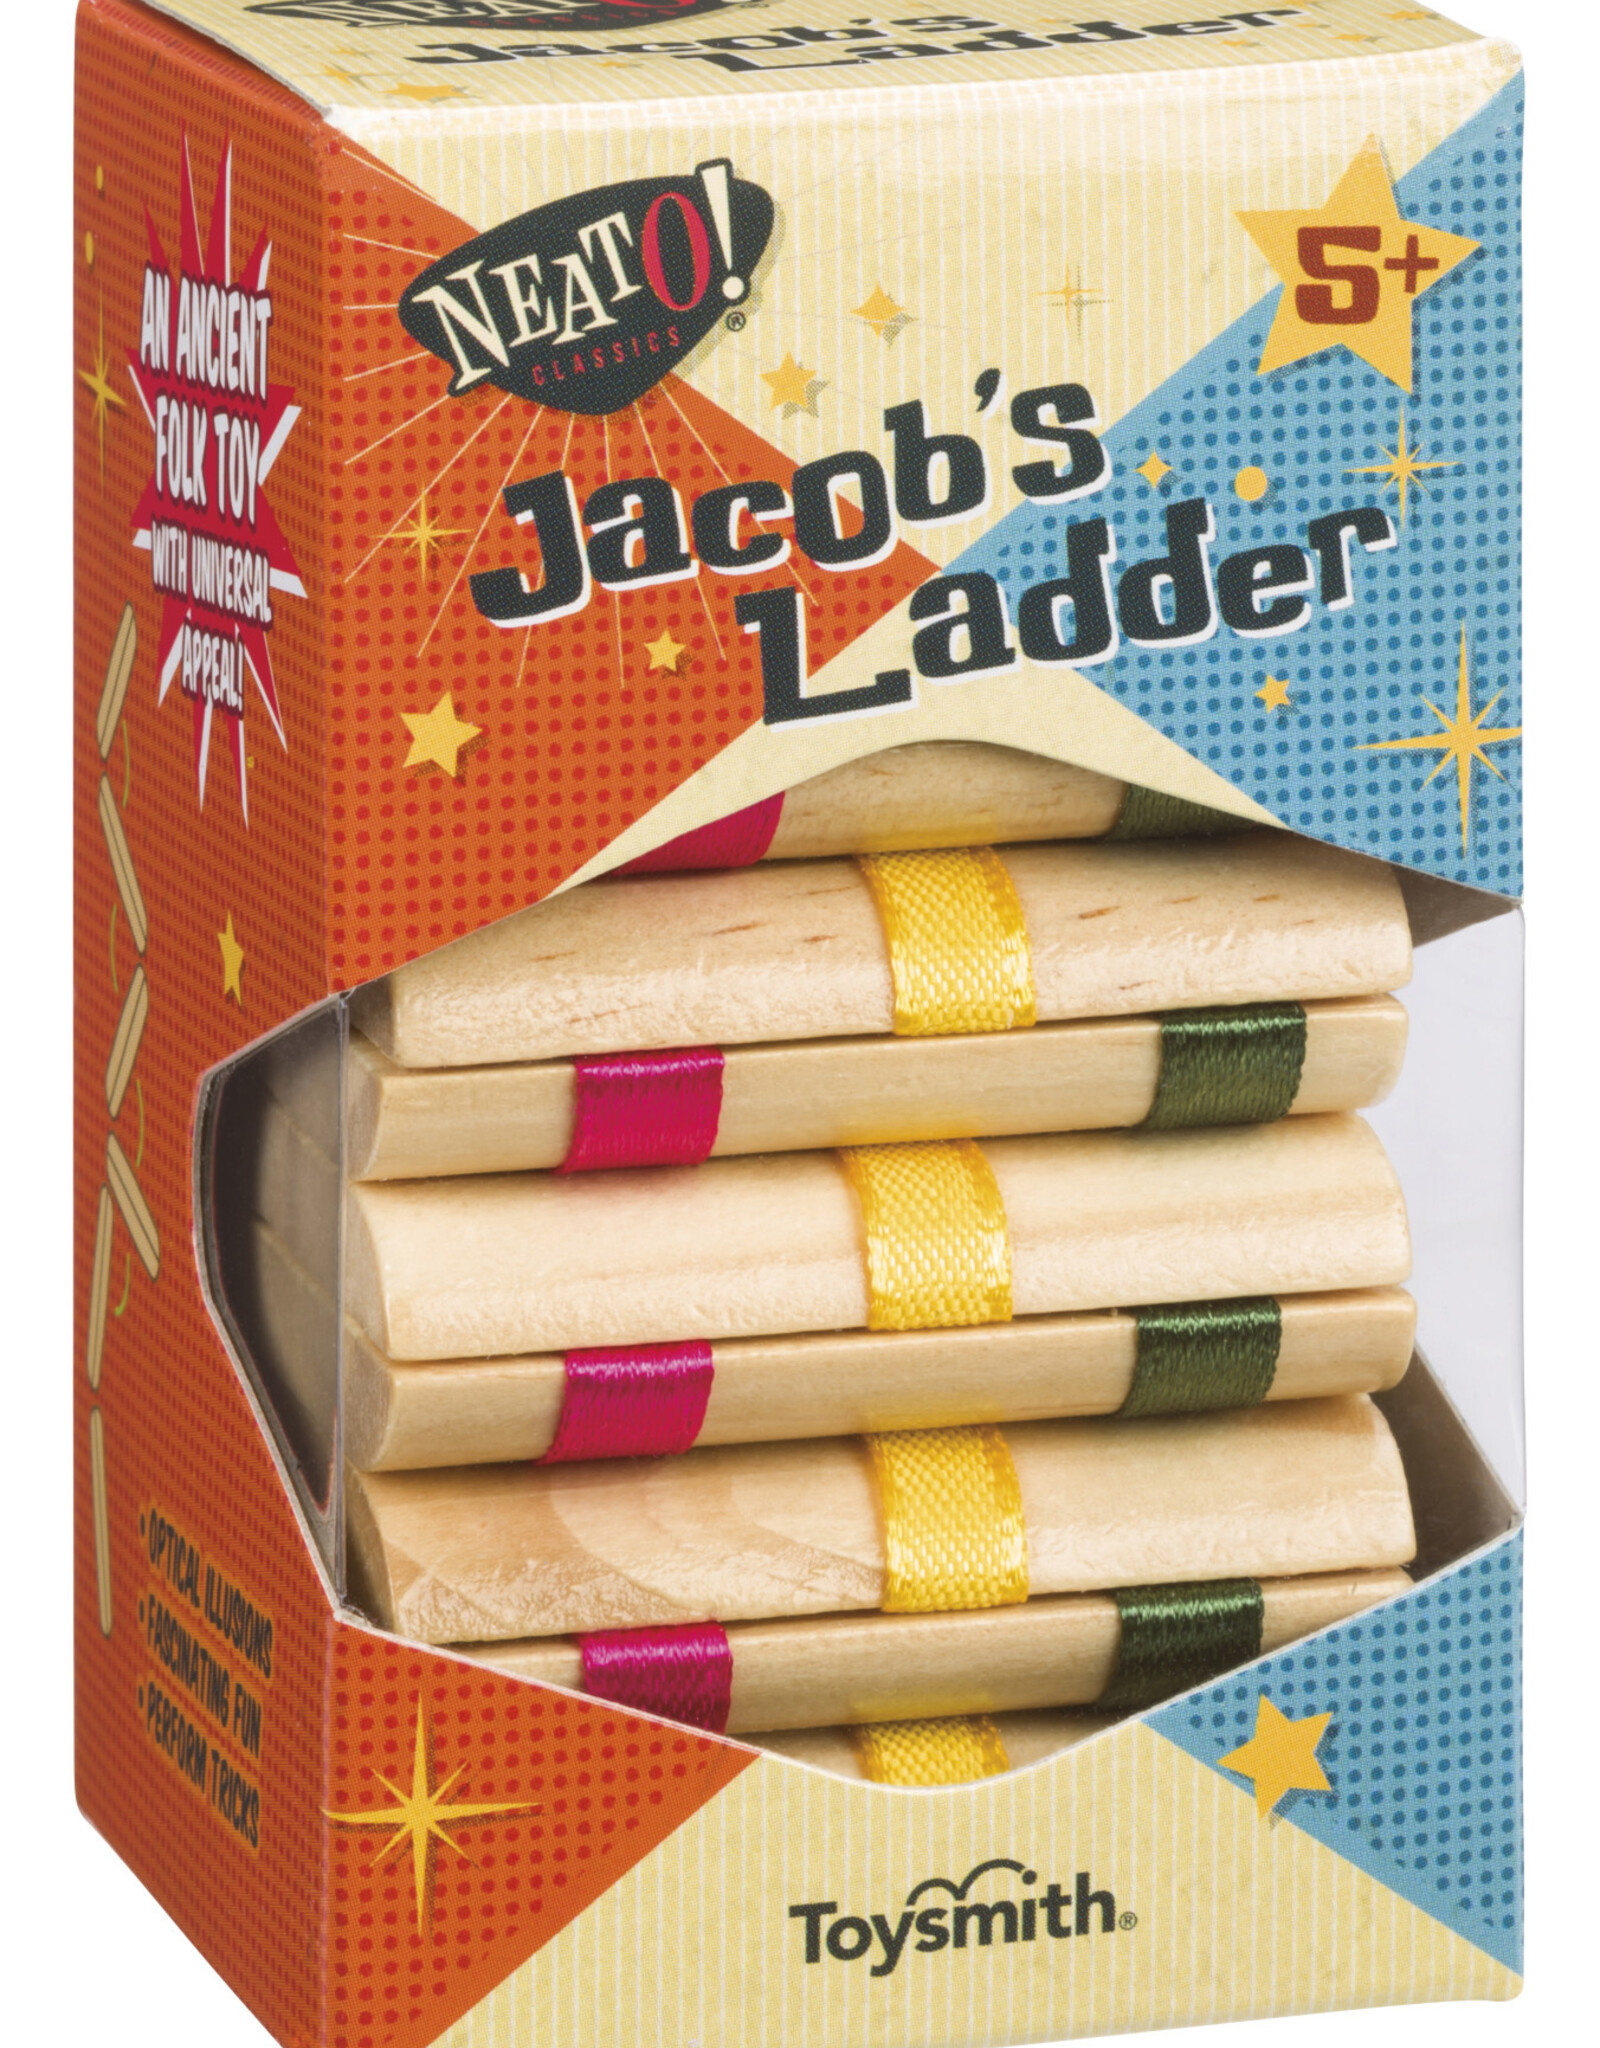 TOYSMITH Jacobs Ladder